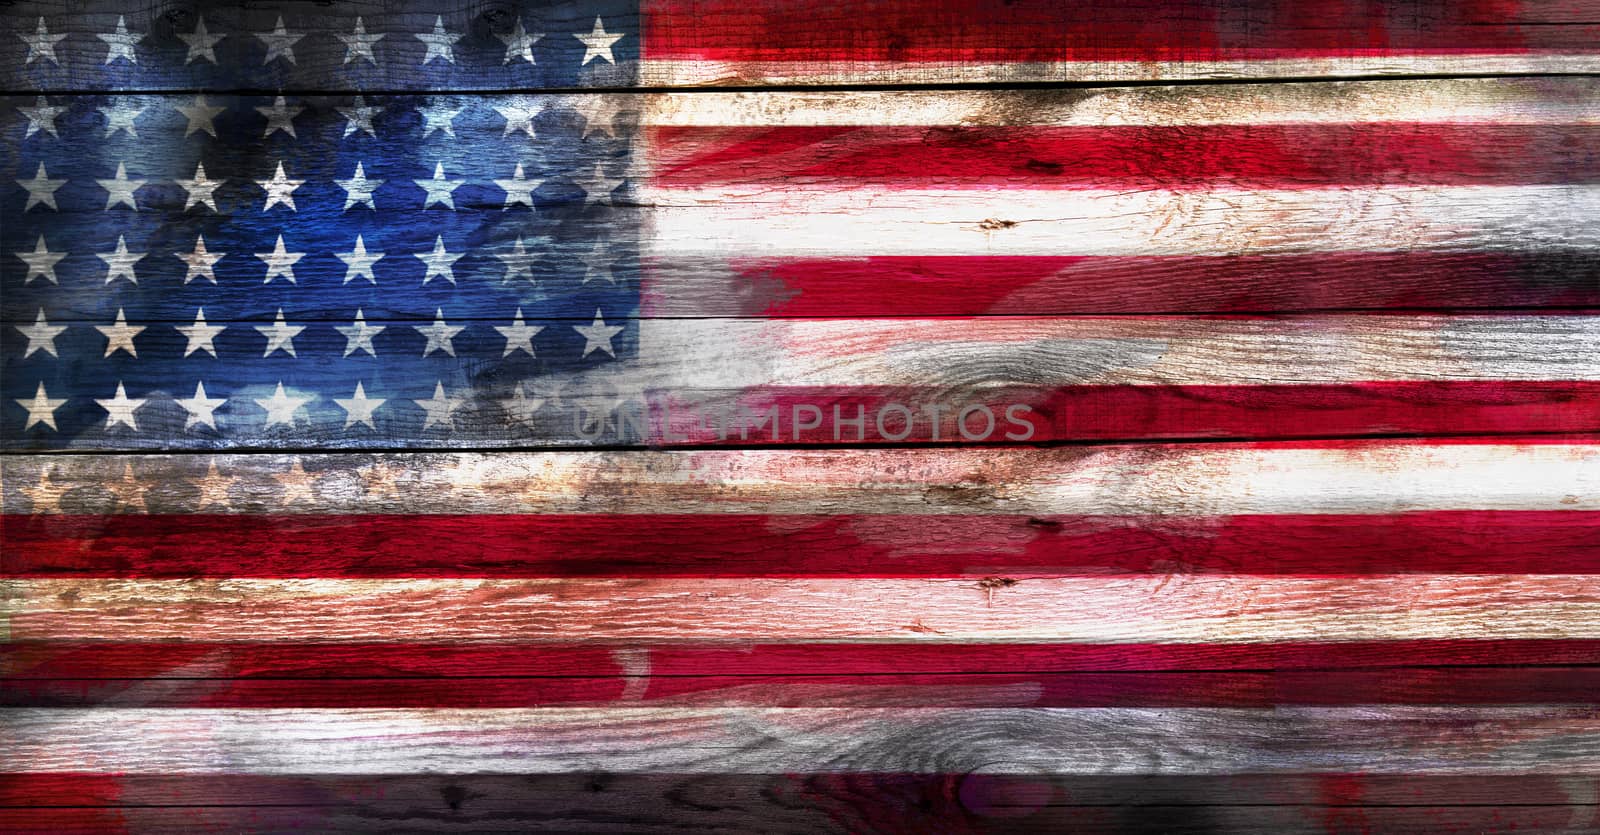 Grunge USA flag on a wood surface